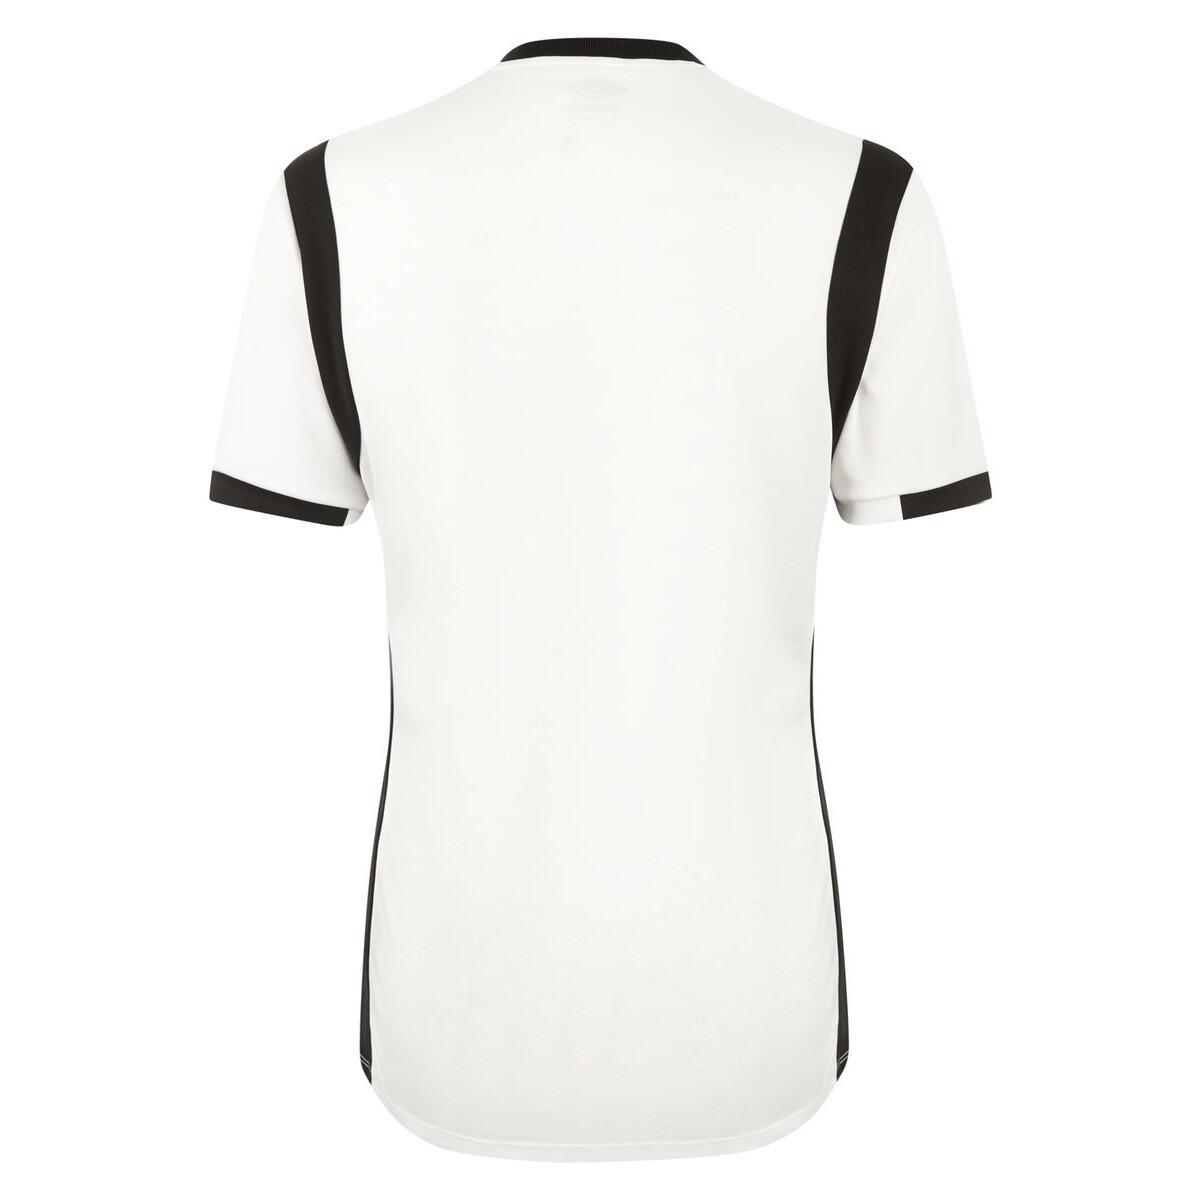 Mens Spartan ShortSleeved Jersey (White/Black) 2/3